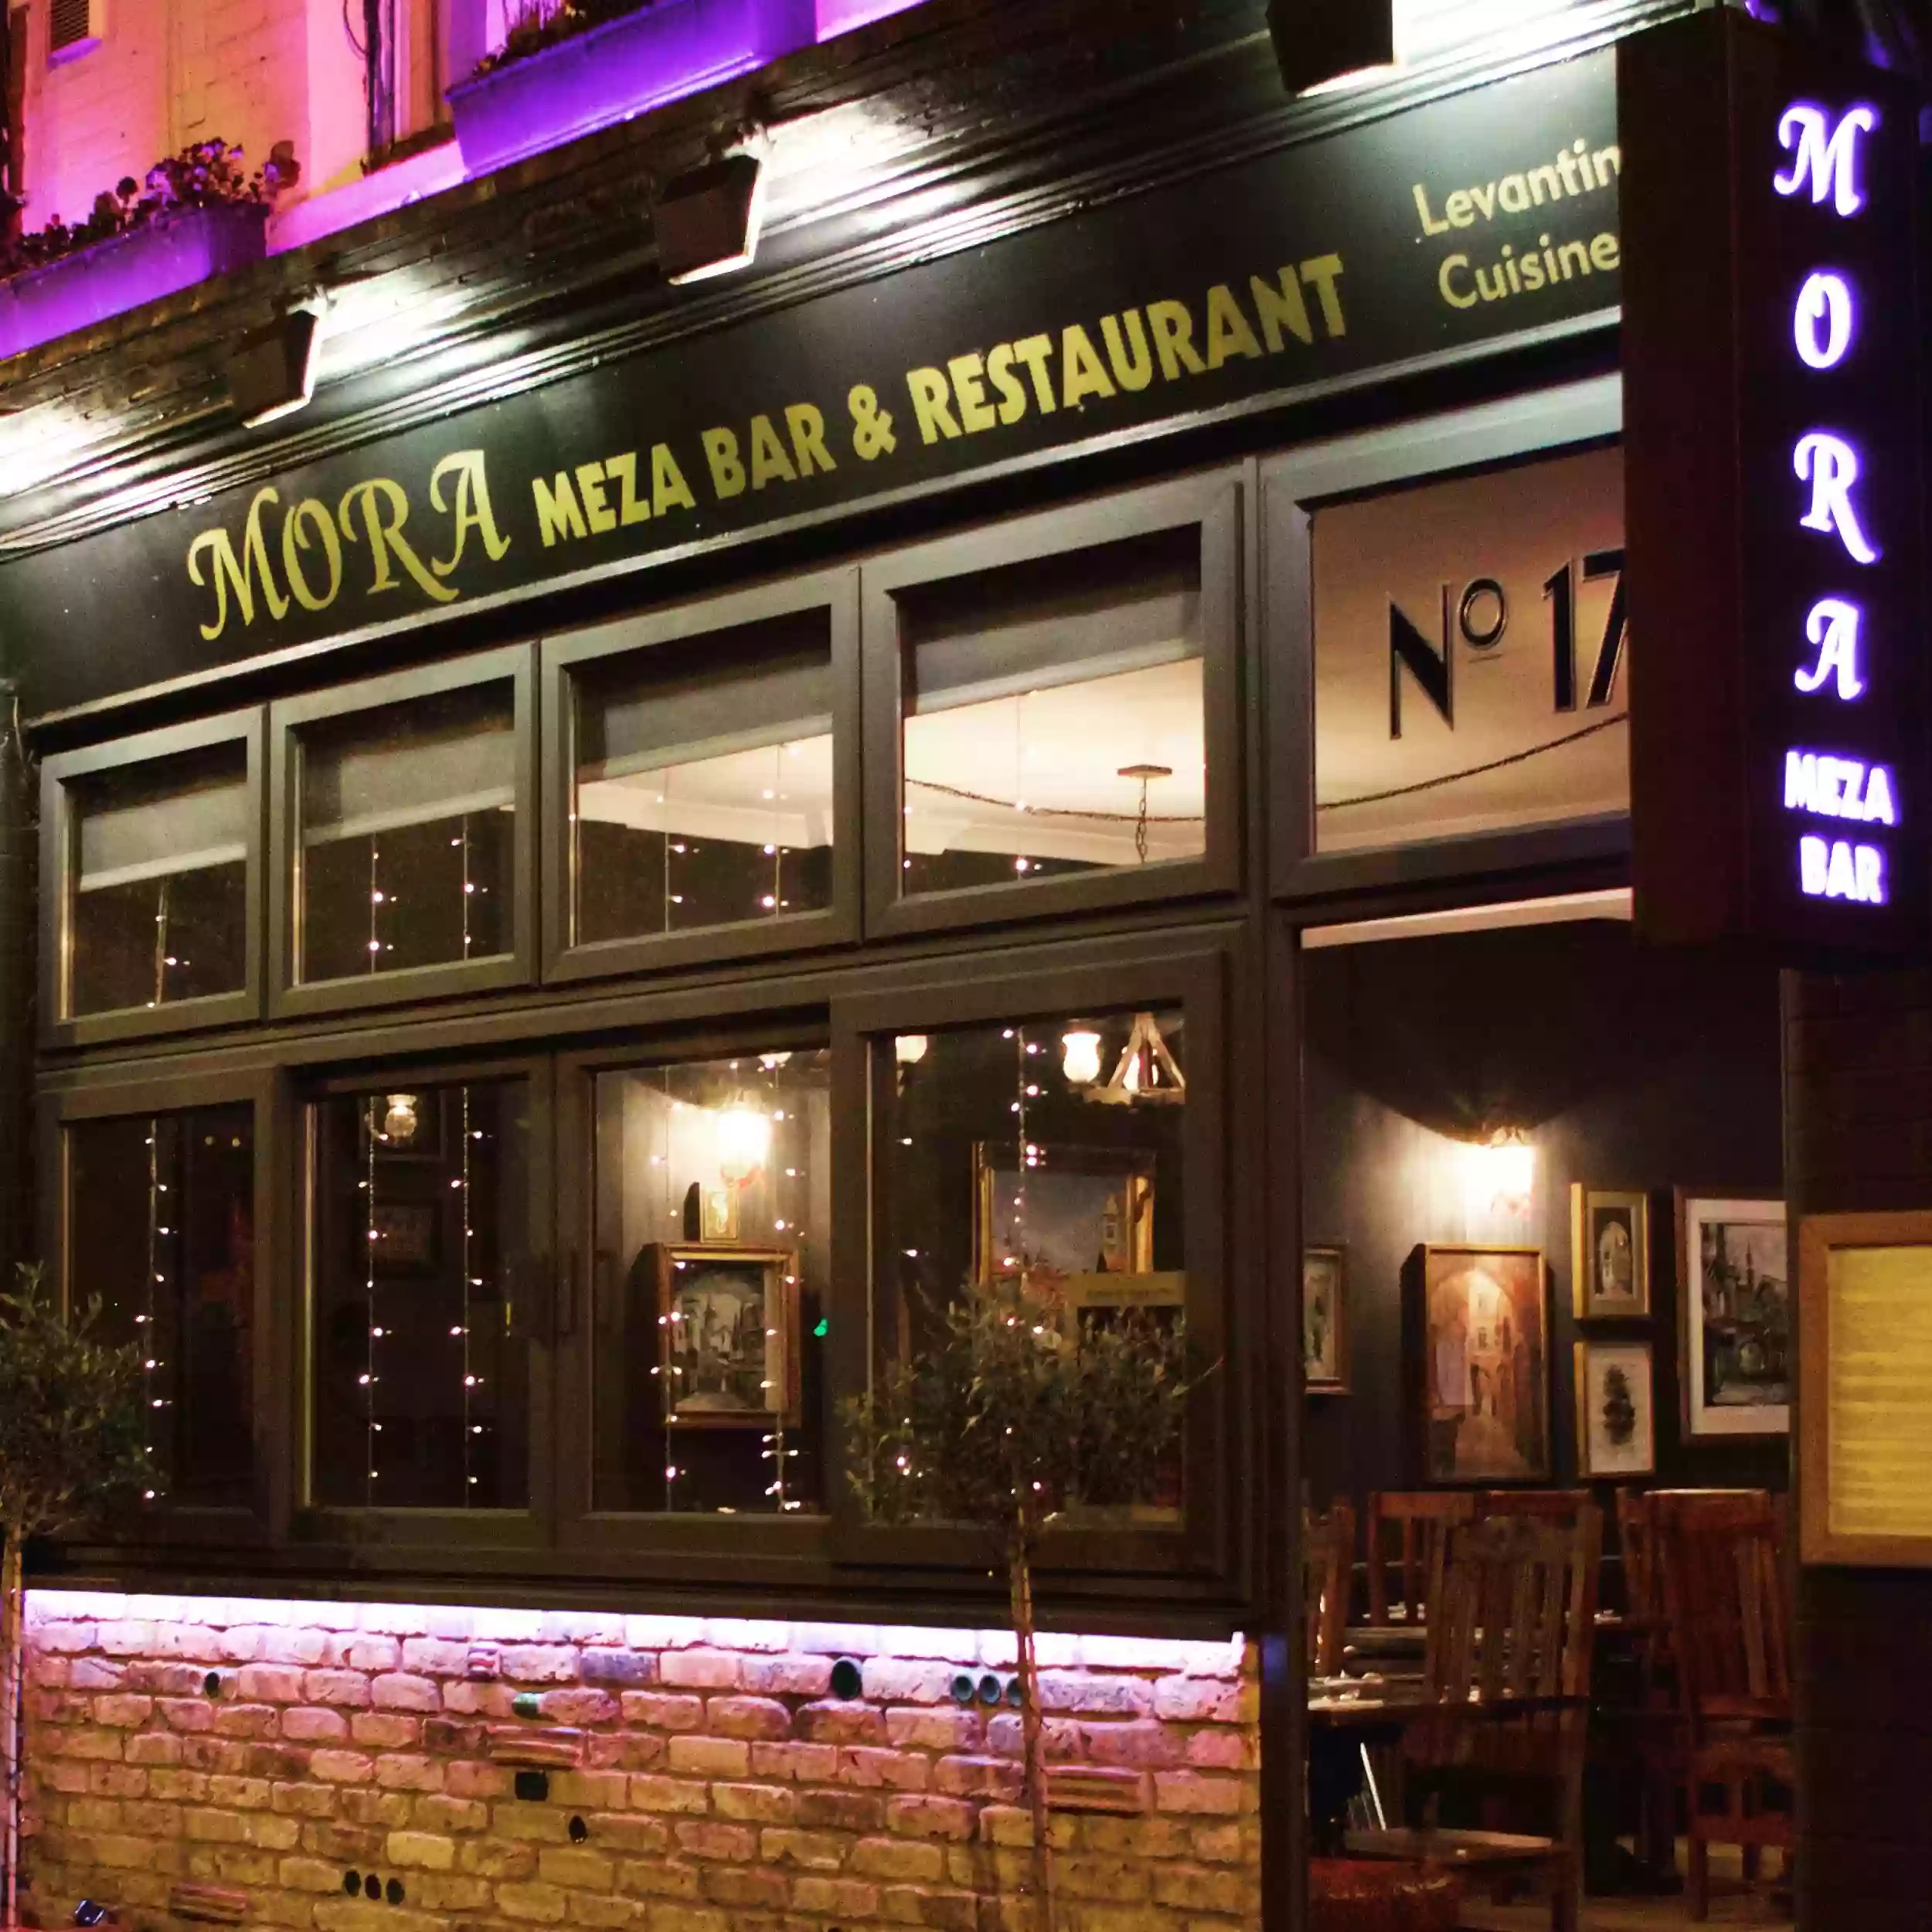 Mora Meza Bar & Restaurant